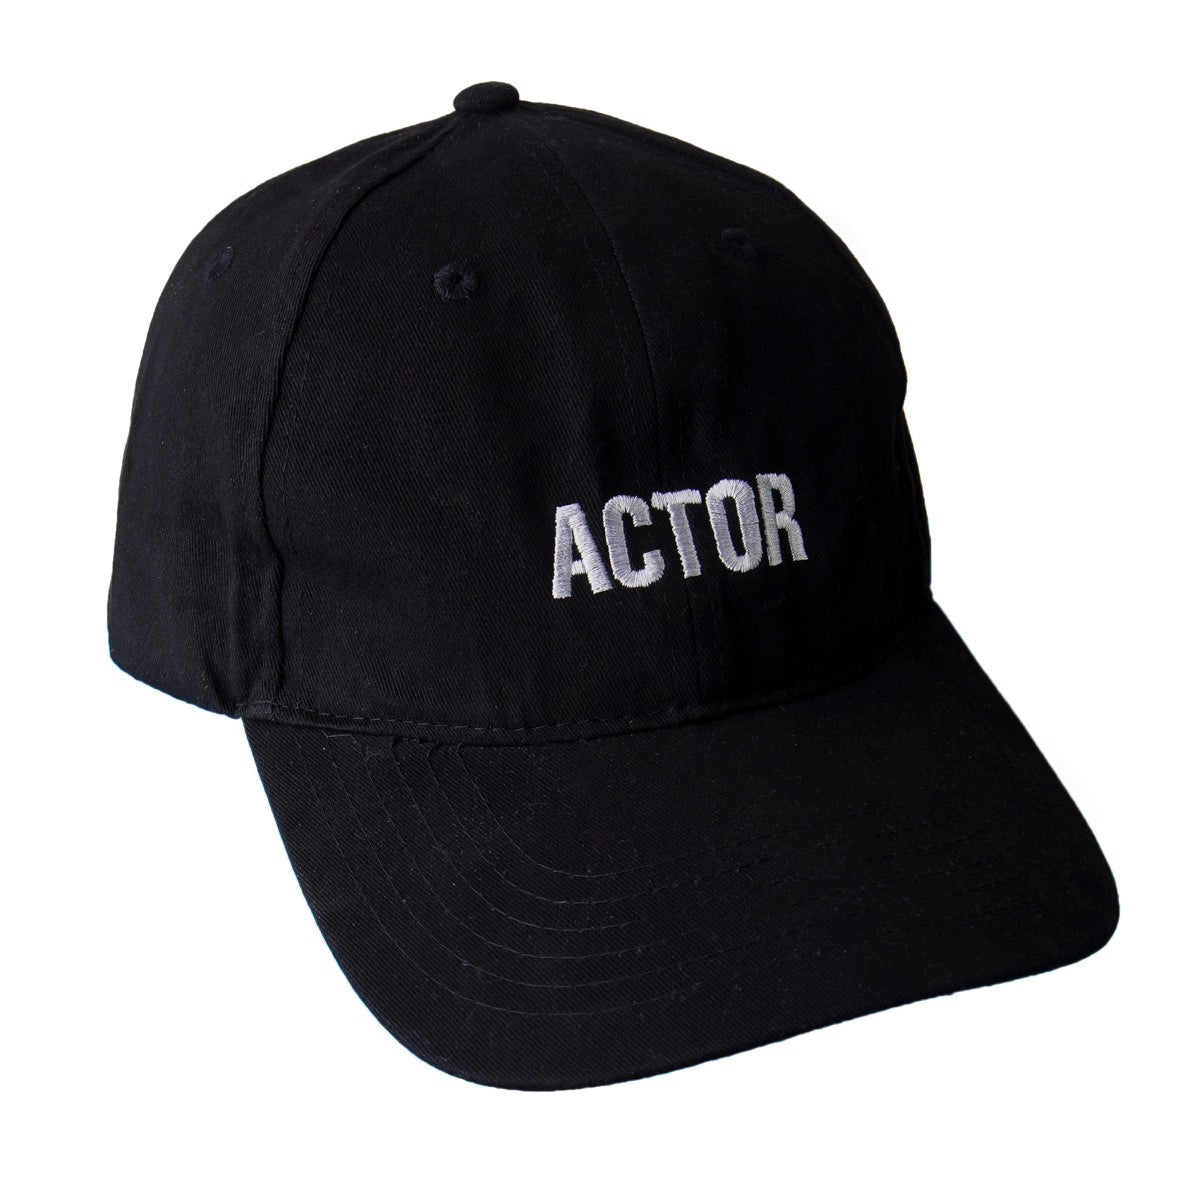 Actor Embroidered Film Role Baseball Cap - Destination PSP